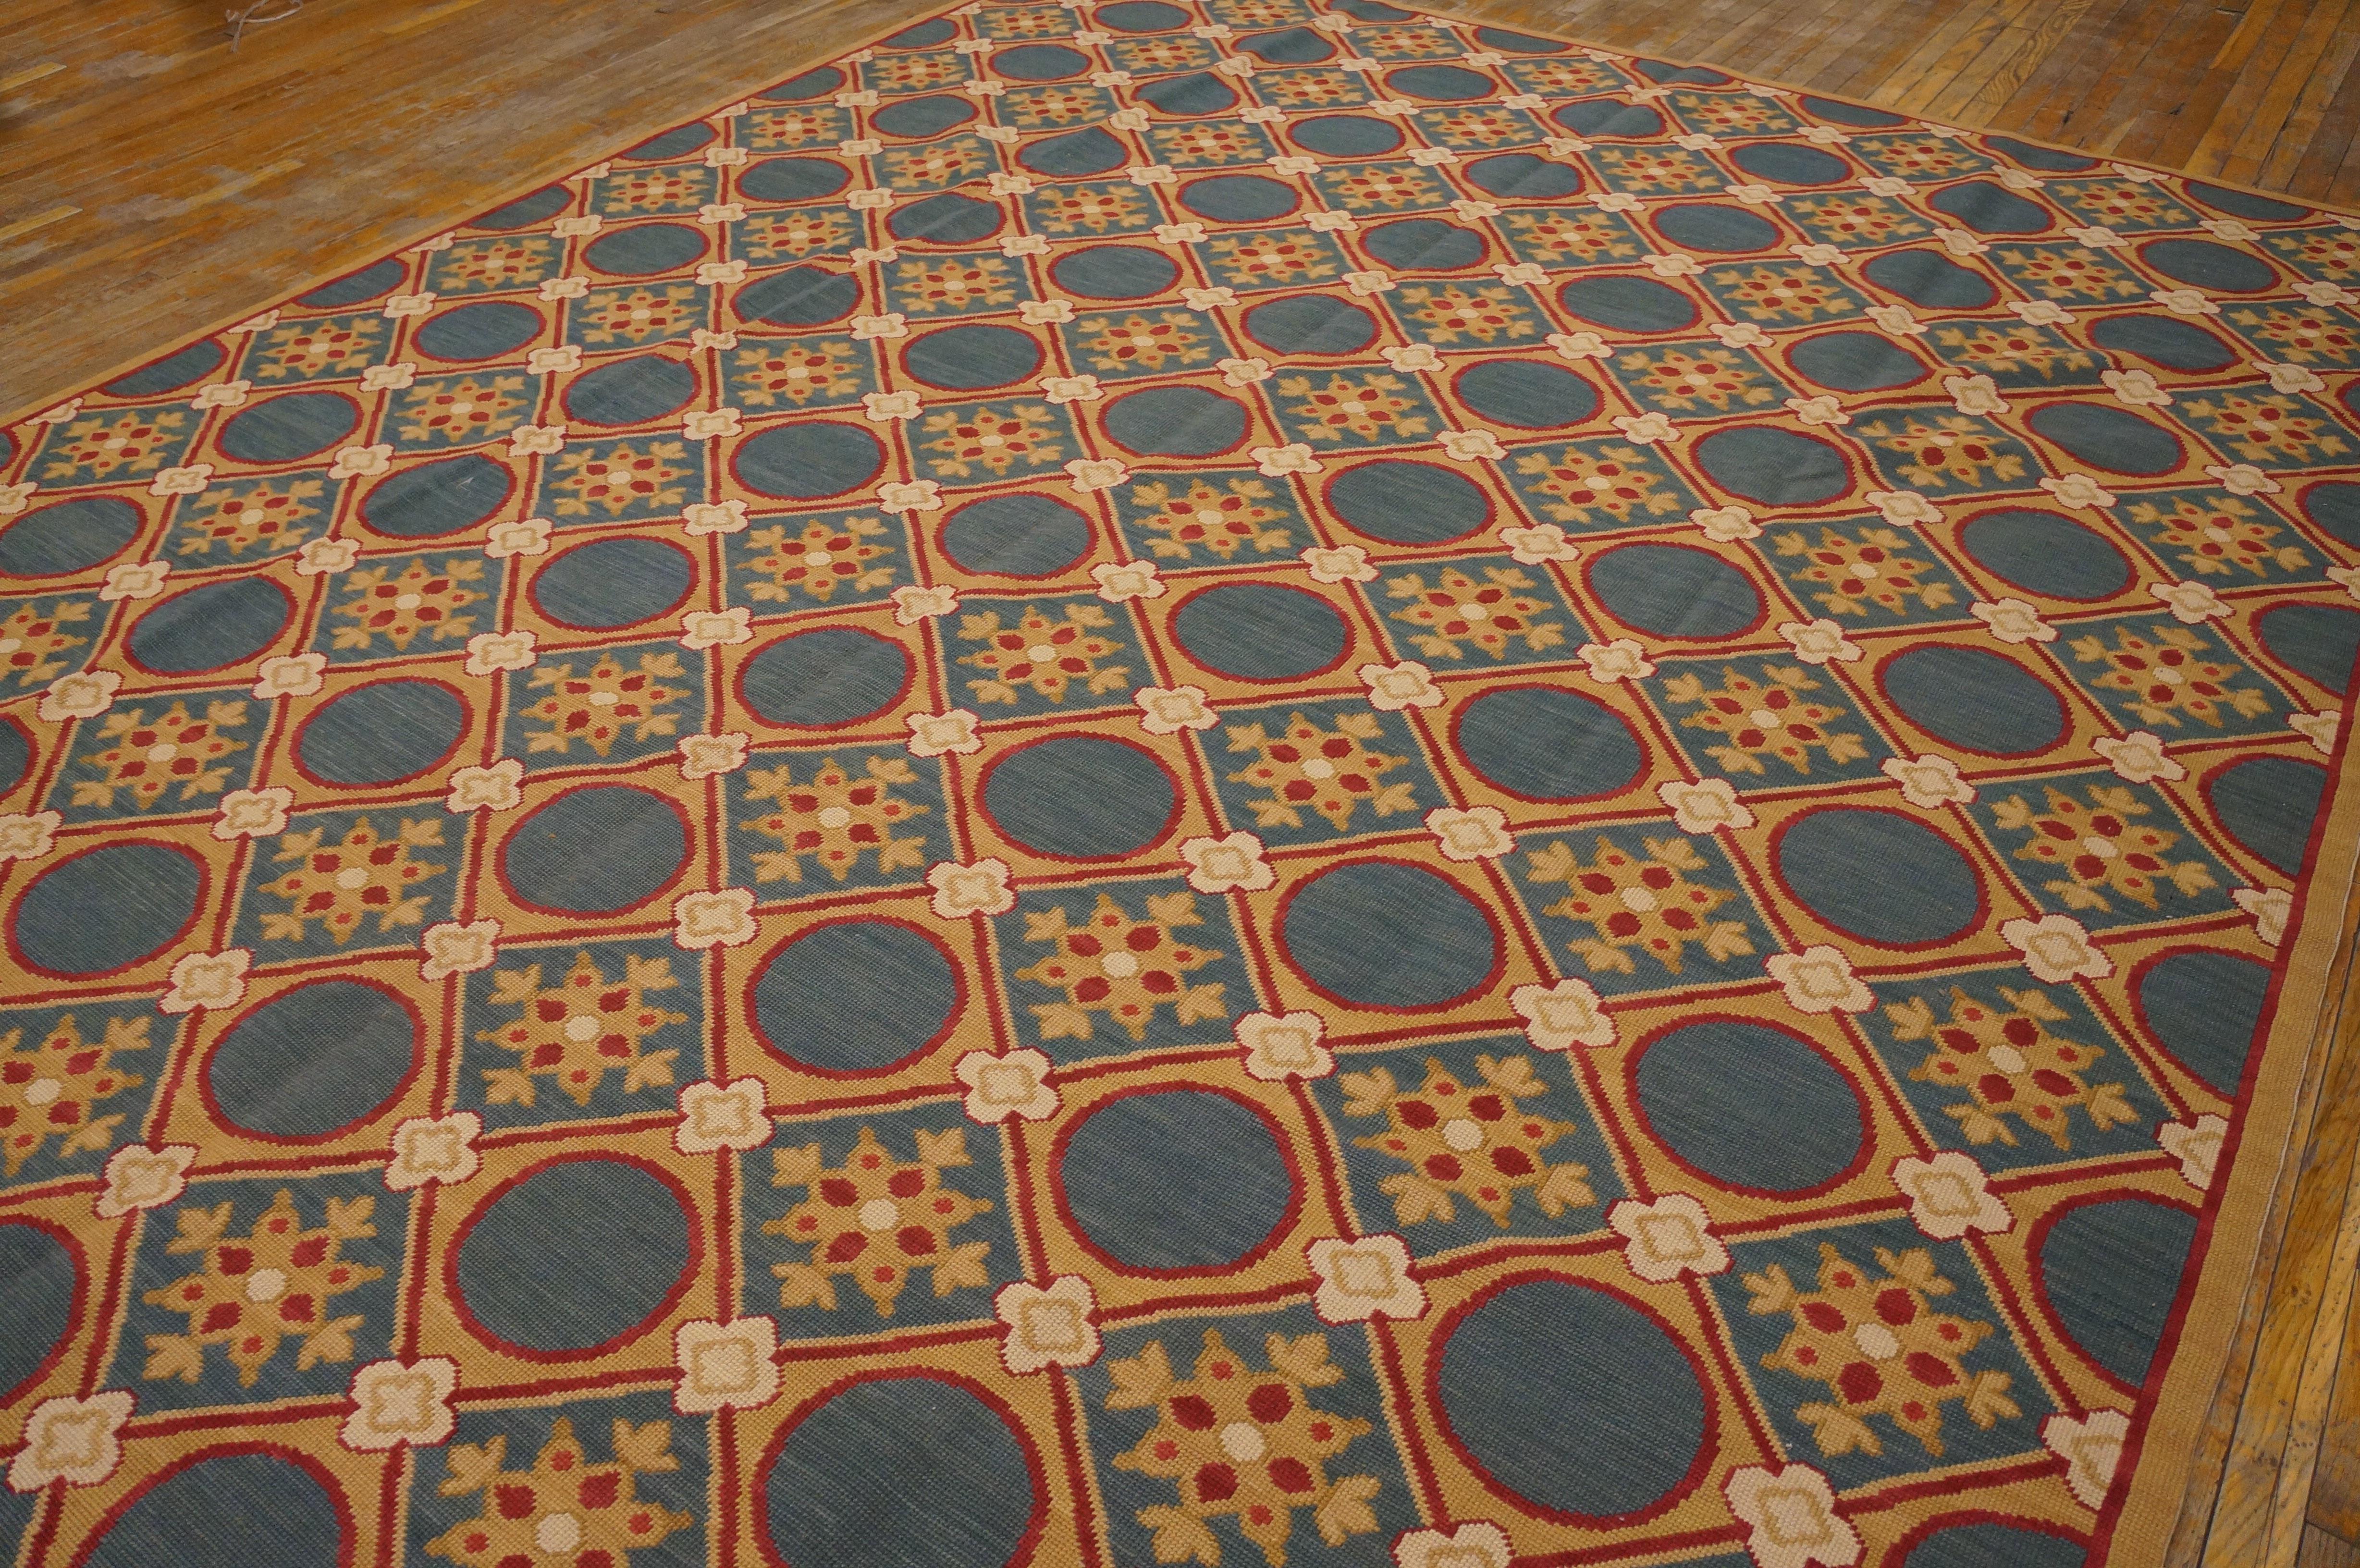  Contemporary Handwoven Needlepoint Flat Weave Carpet ( 9' x 12' - 275 x 365 cm  4